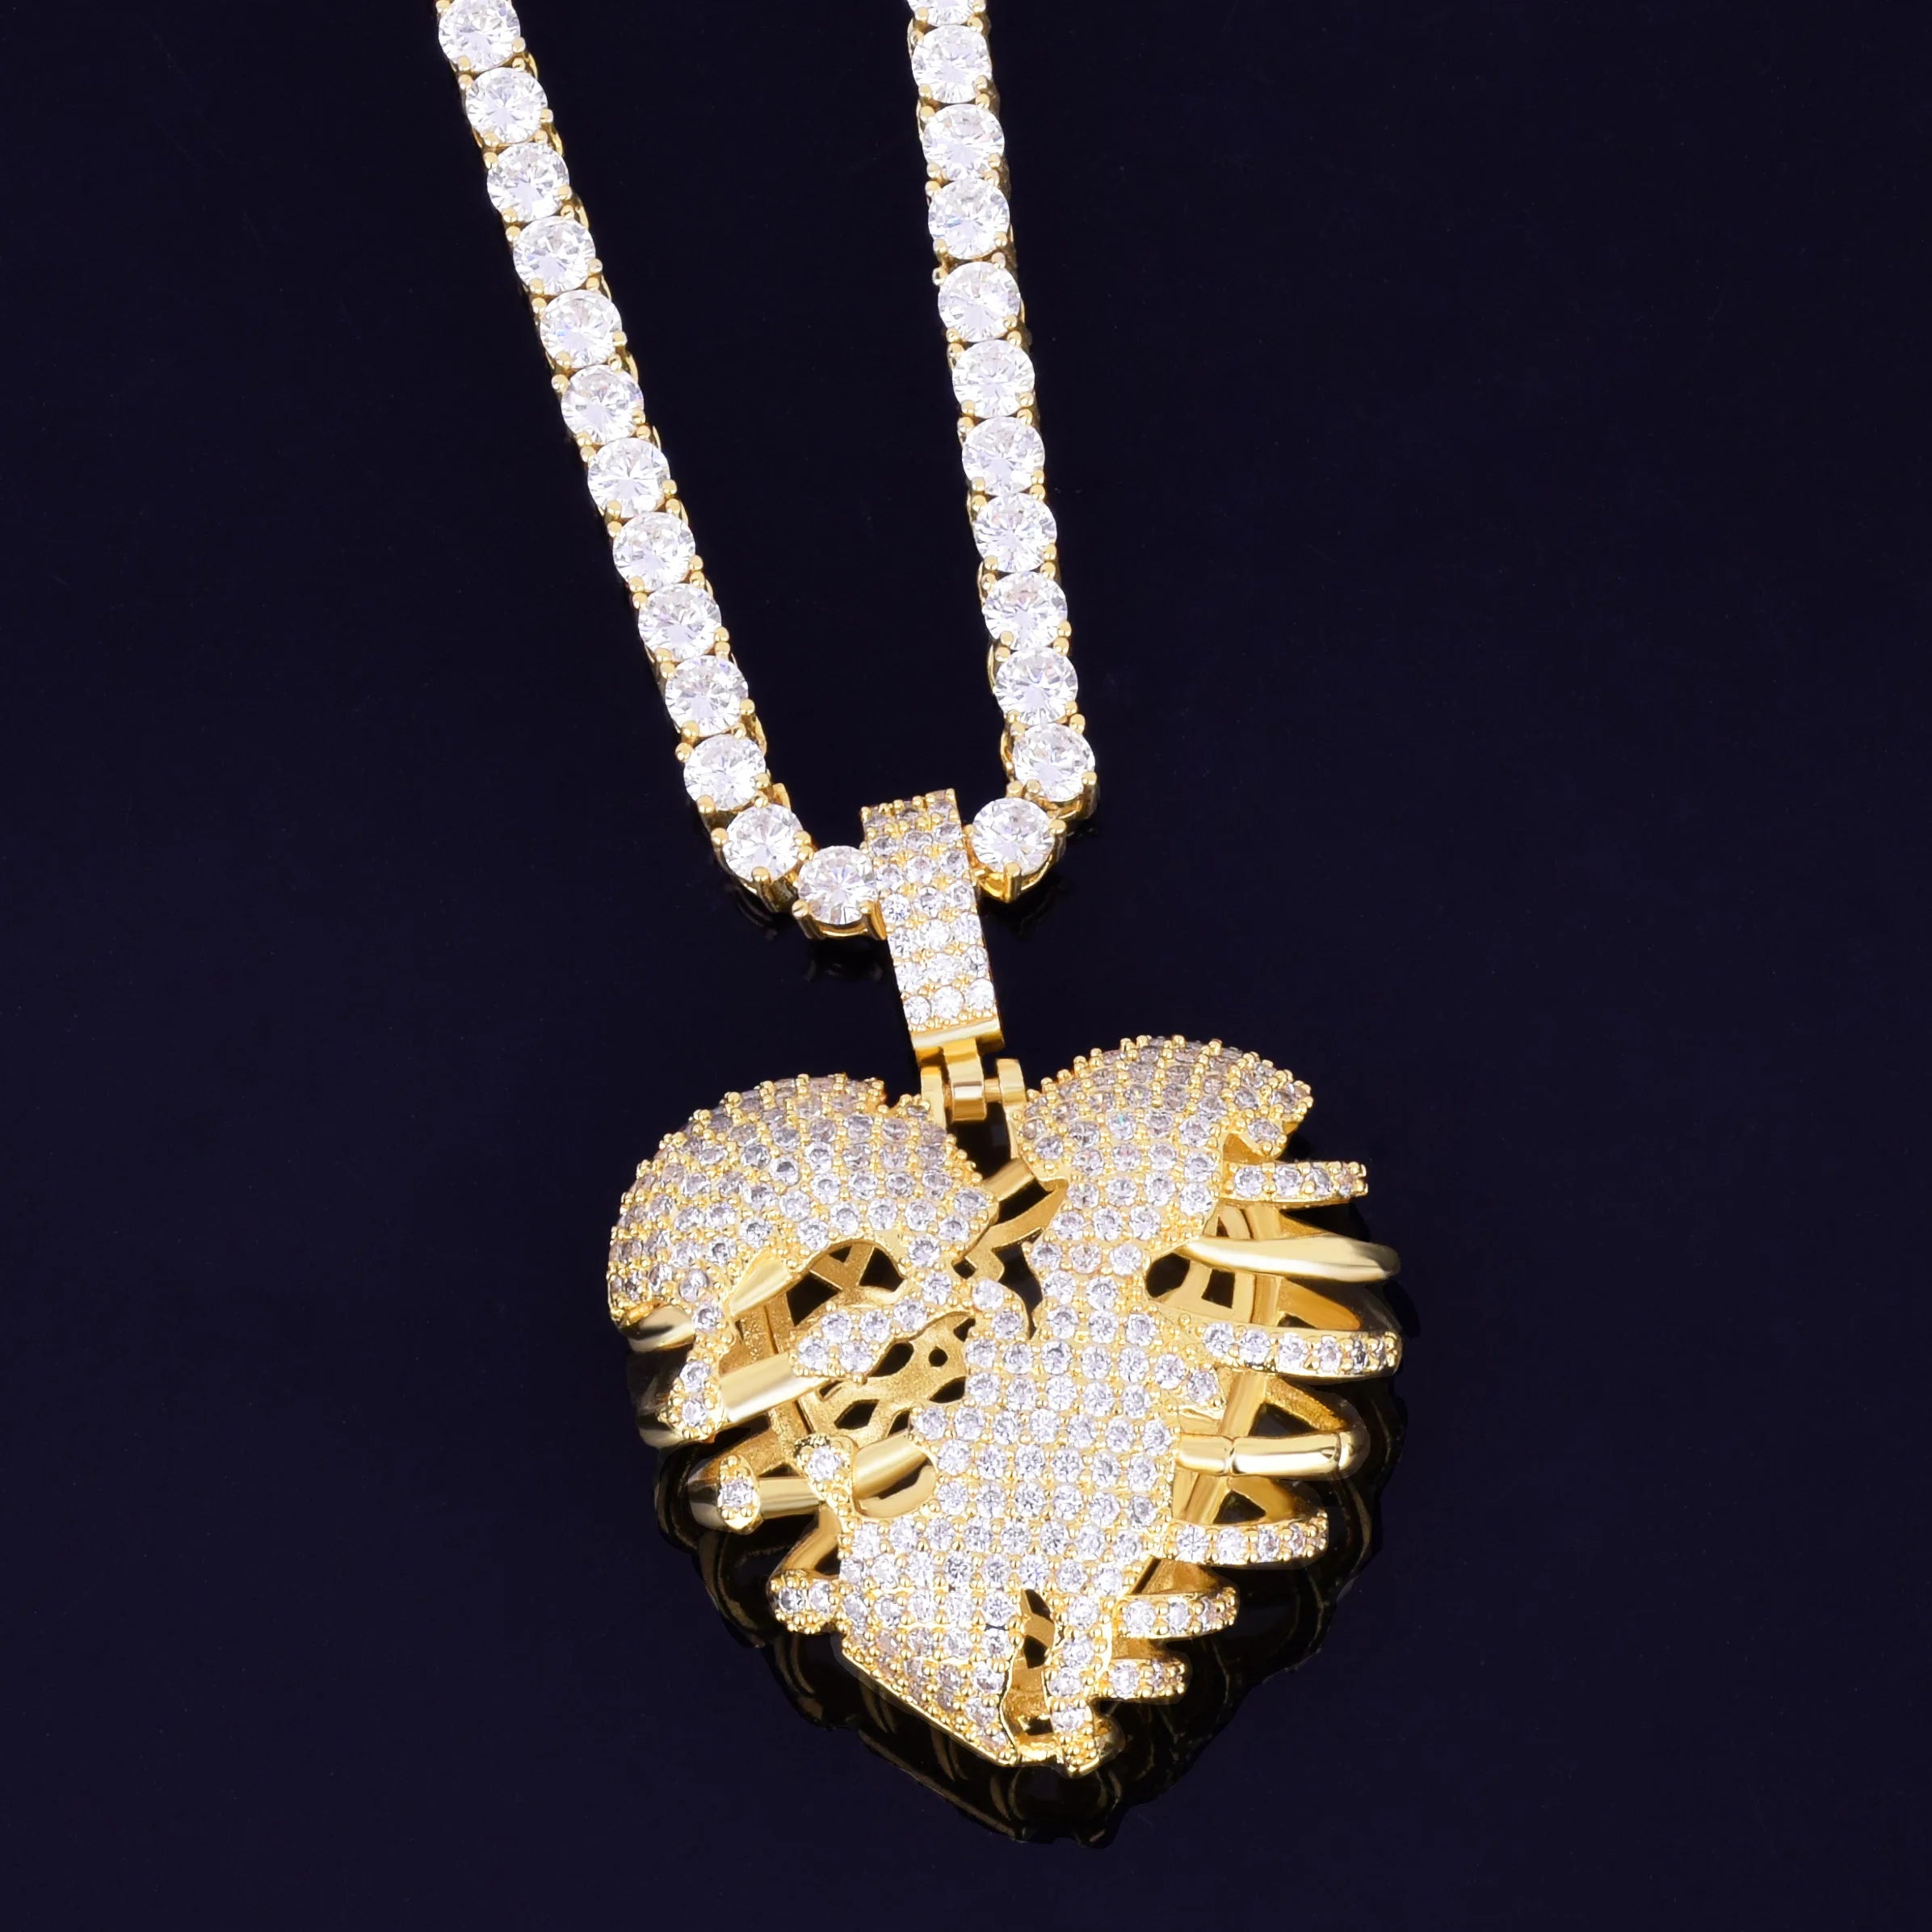 Broken Skeleton Heart Pendant Necklace